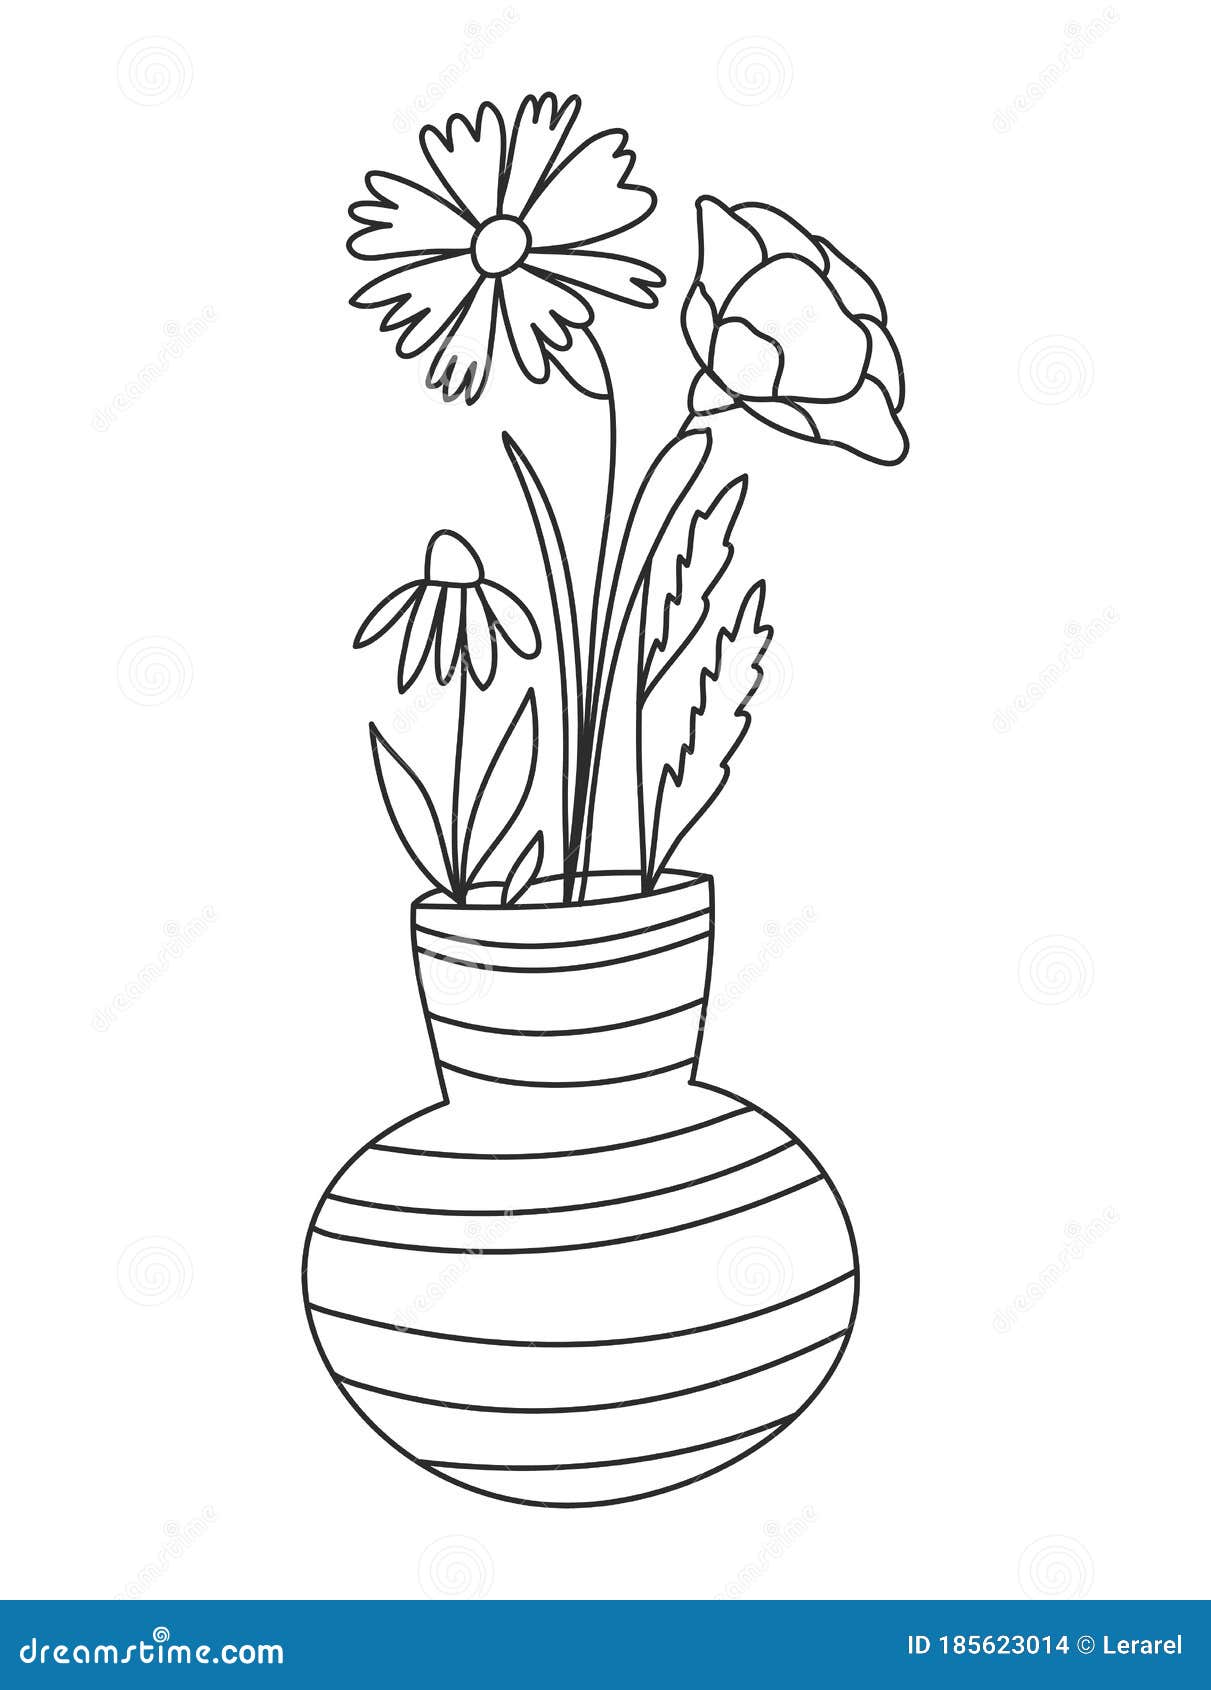 Abstract Anime Characters Ceramics Vase,Home Desktop Decor Flowerpot  Arrangement Container Ornament Dried Flower Vase,Home Desktop Landscape  Decor,A : Amazon.ae: Patio, Lawn & Garden